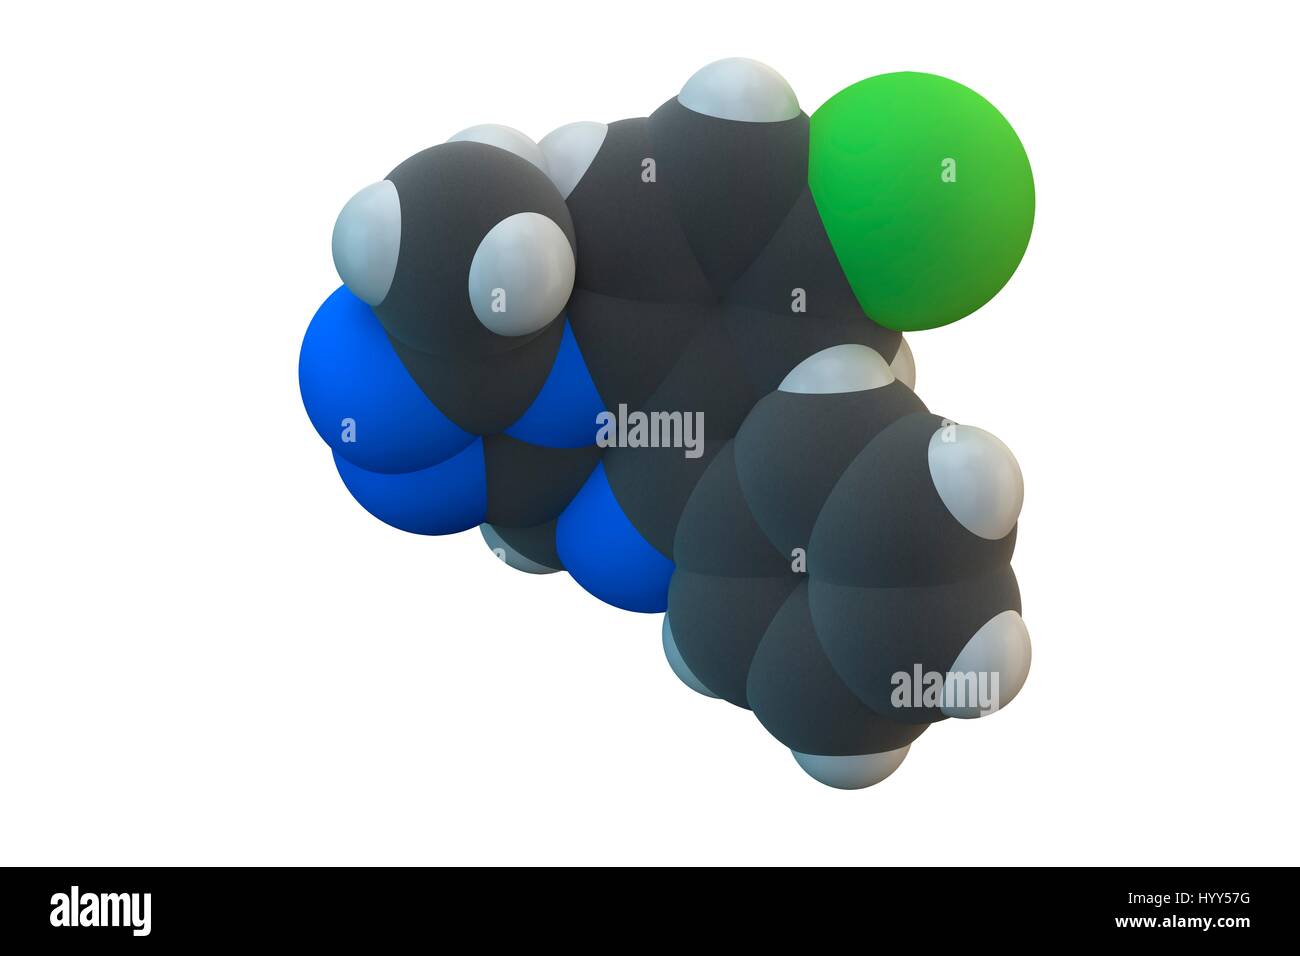 Alprazolam sedative and hypnotic drug (benzodiazepine class) molecule. Chemical formula is C17H13ClN4. Atoms are represented as spheres: carbon (grey), hydrogen (white), chlorine (green), nitrogen (blue). Illustration. Stock Photo